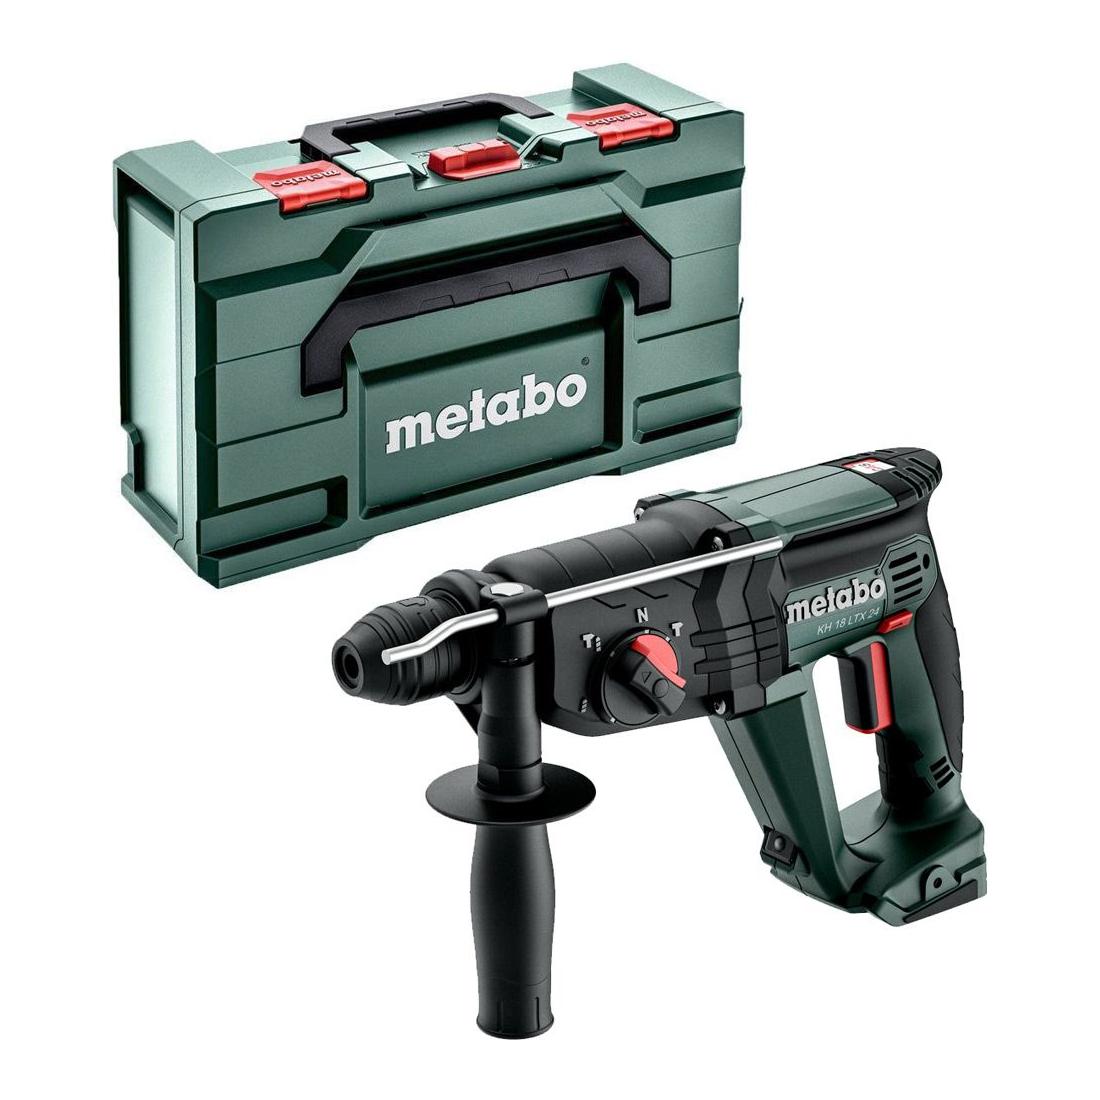 Metabo Cordless Hammer Drill KH 18 LTX 24 18V Body Only in MetaBOX Case